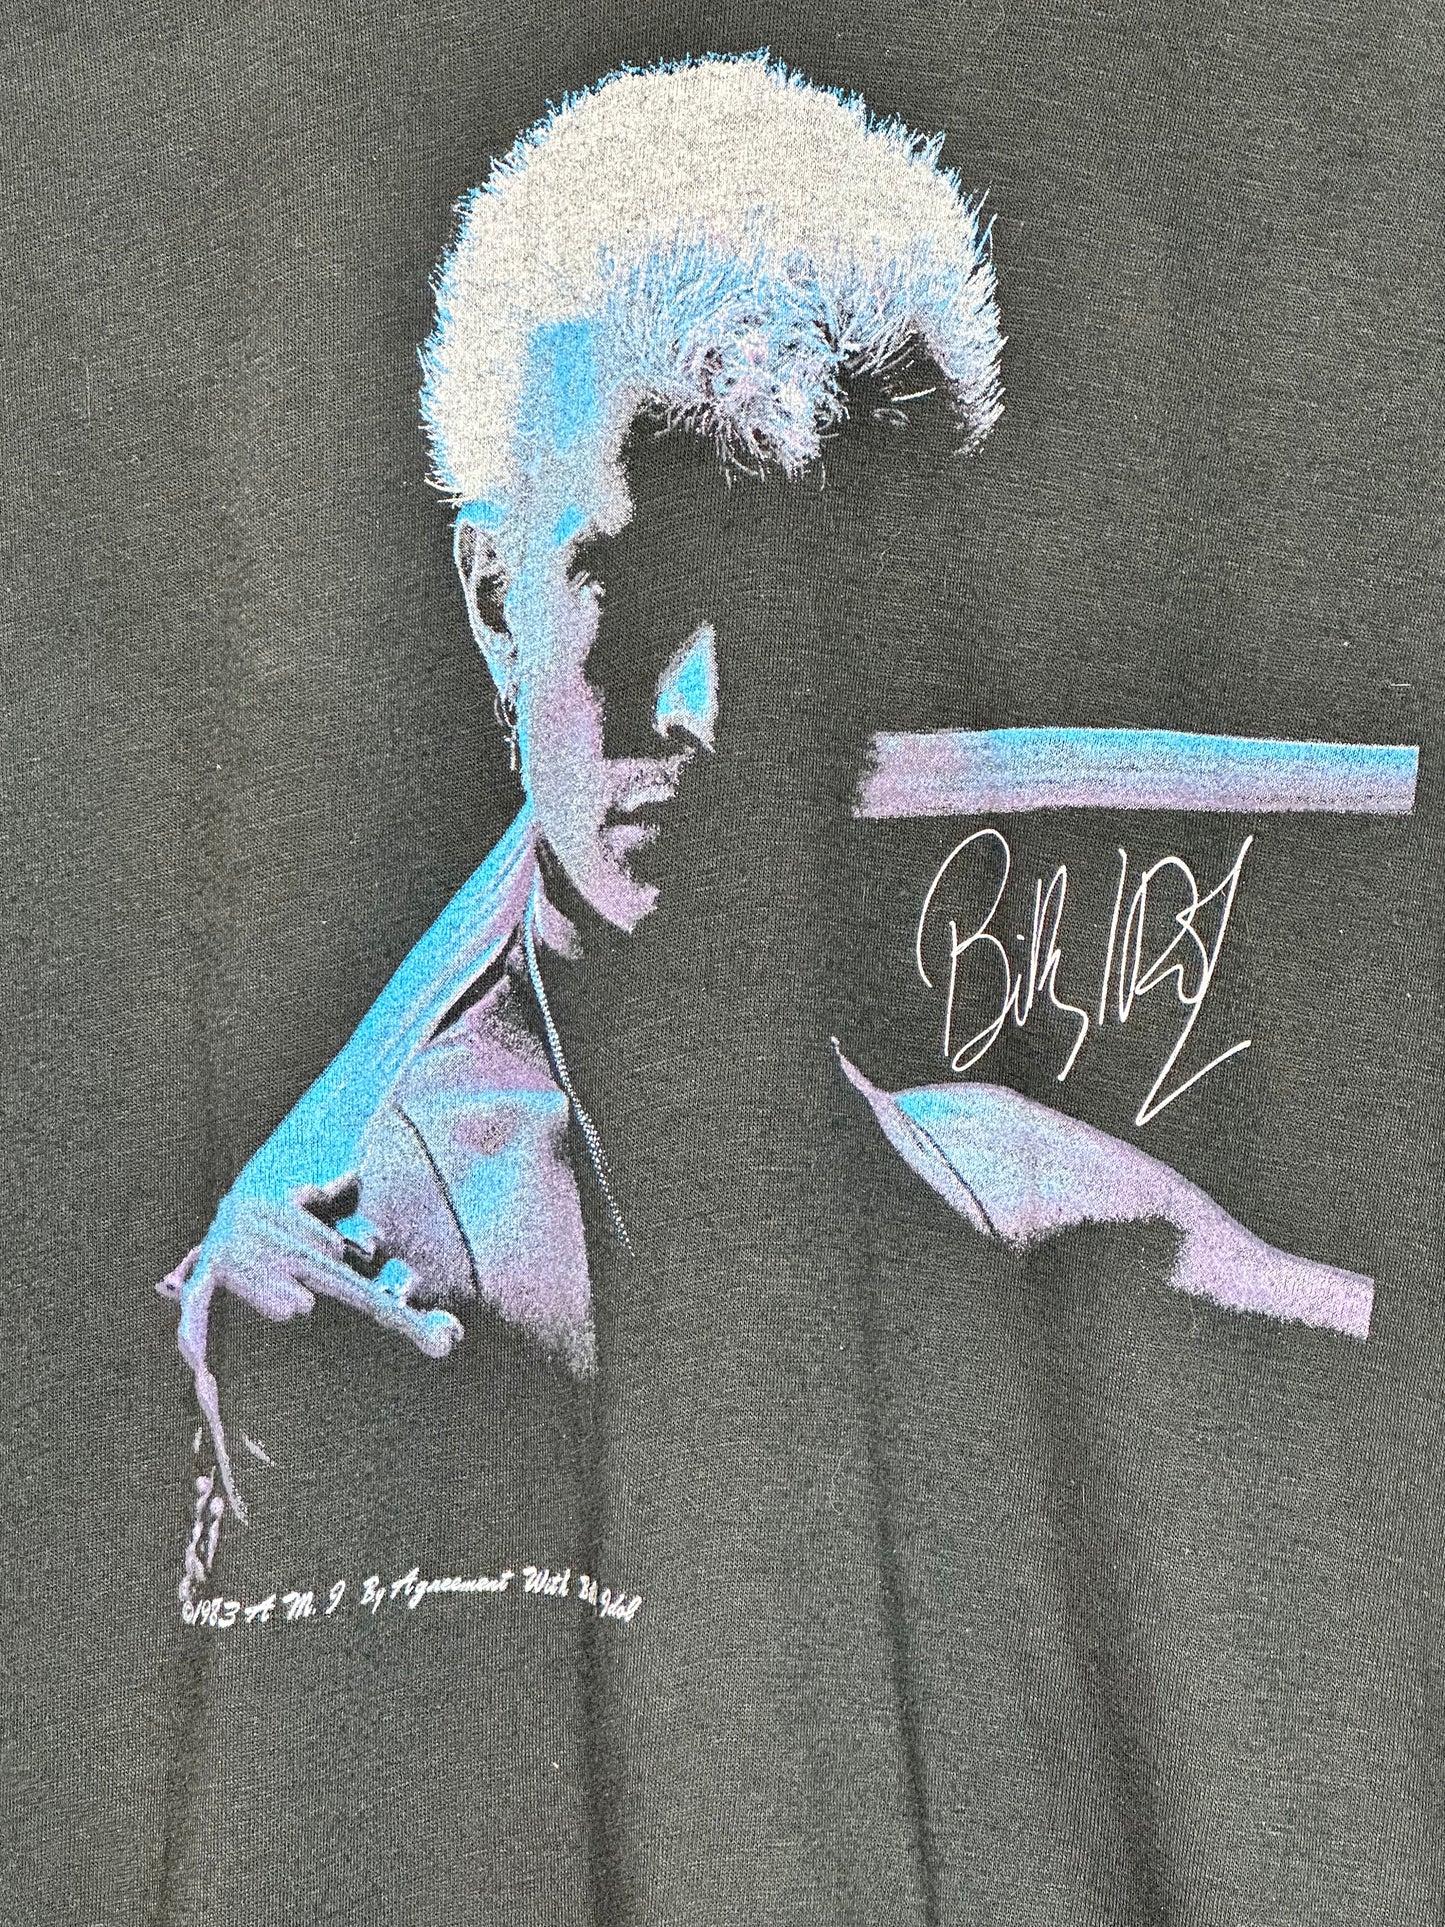 Vintage 1983 Billy Idol T-Shirt S